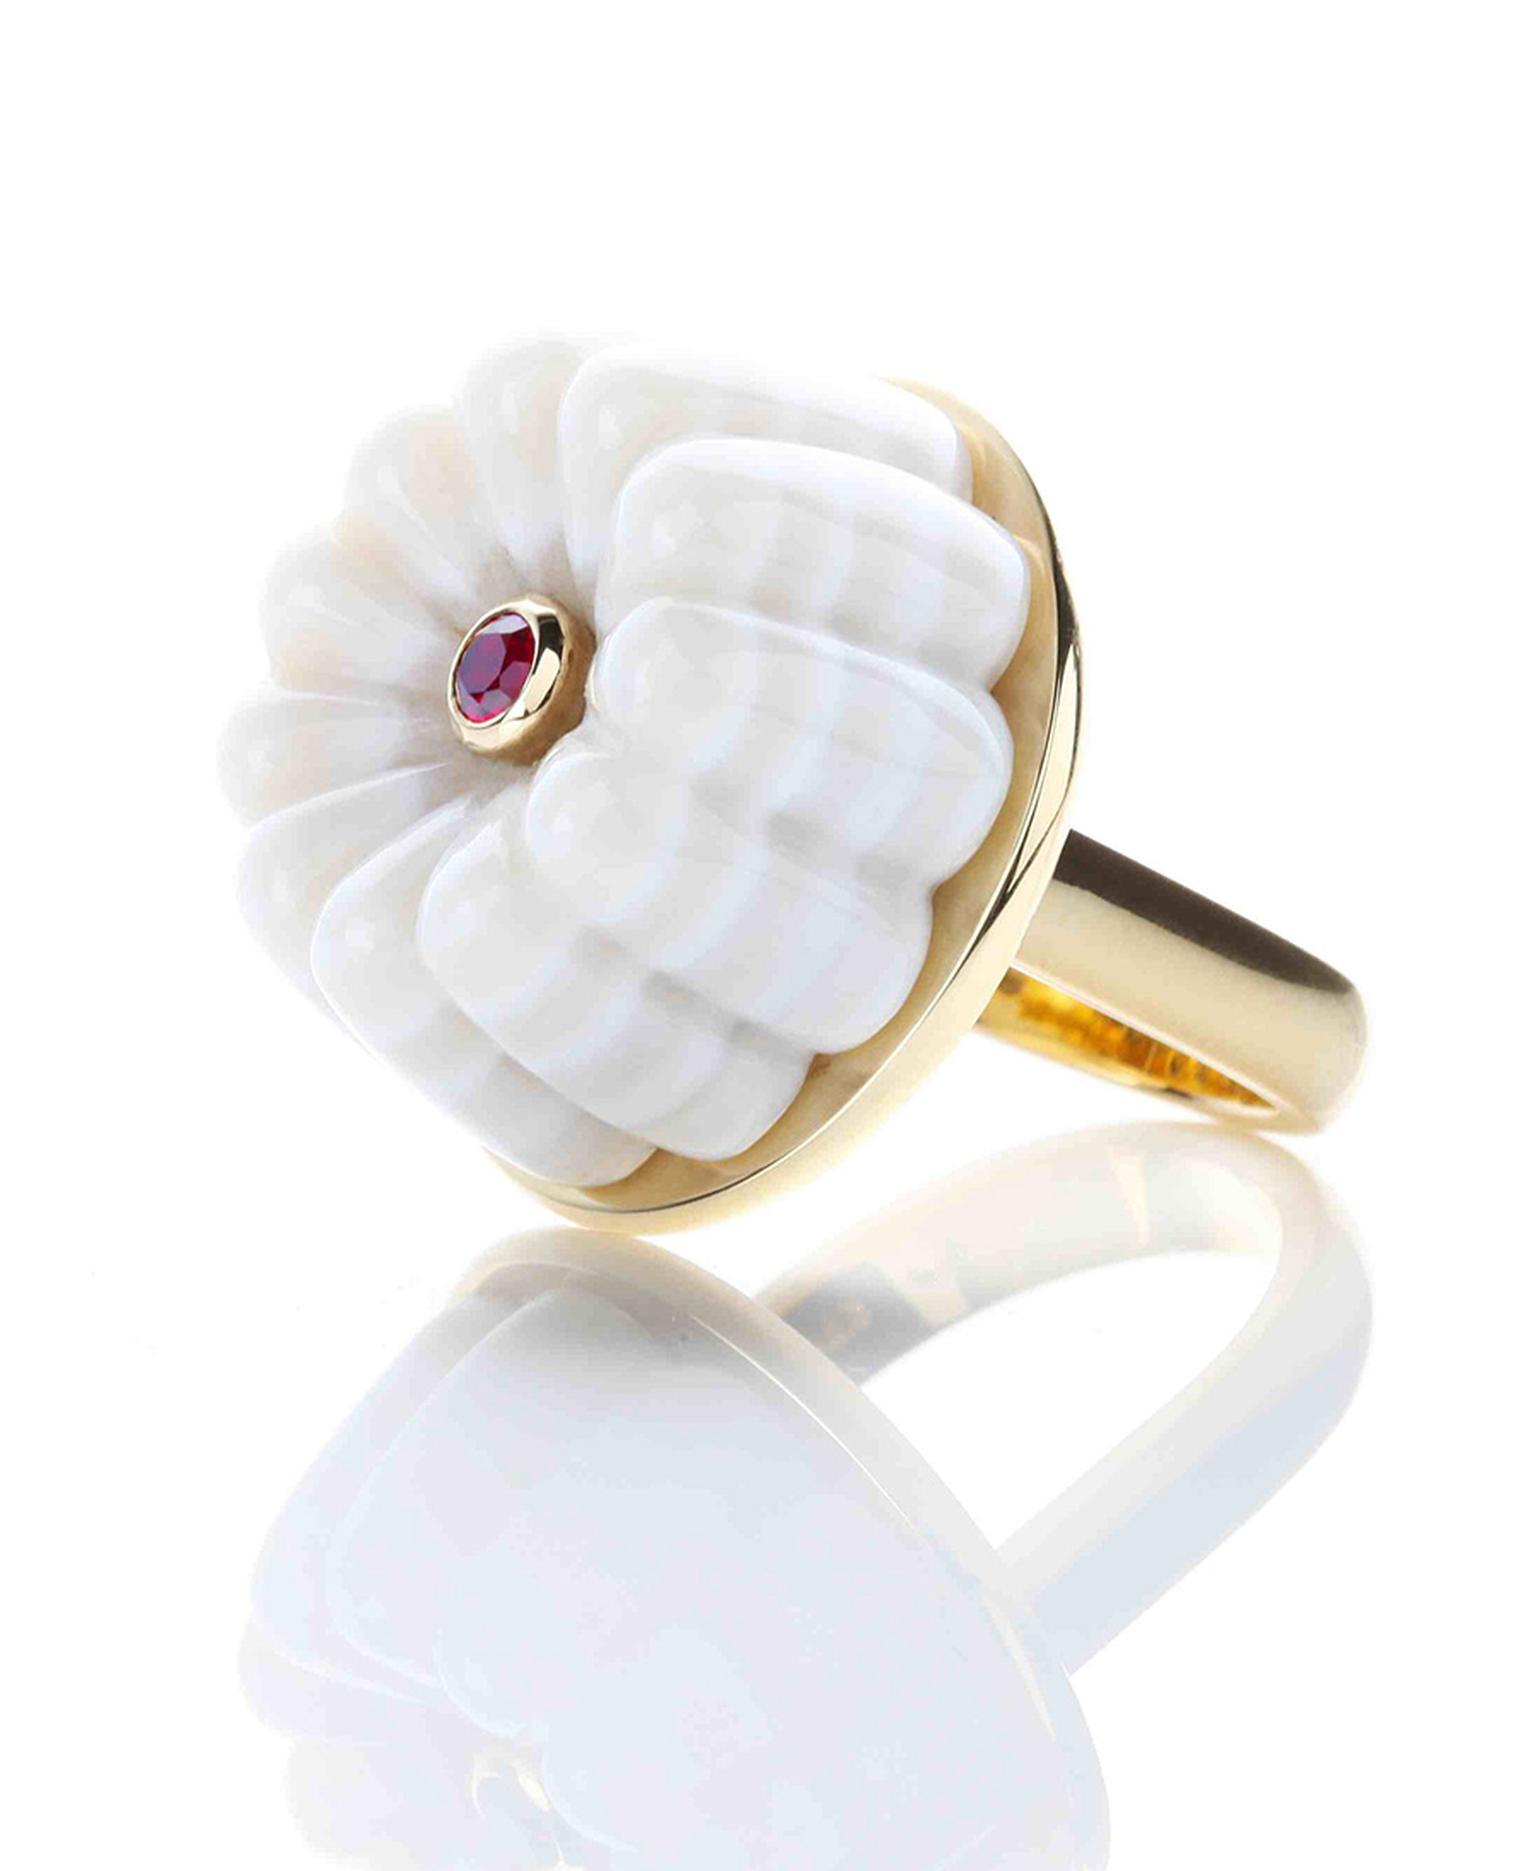 Cora-Sheibani-jelly-and-guglehopf-rings--£3500--£4200.jpg